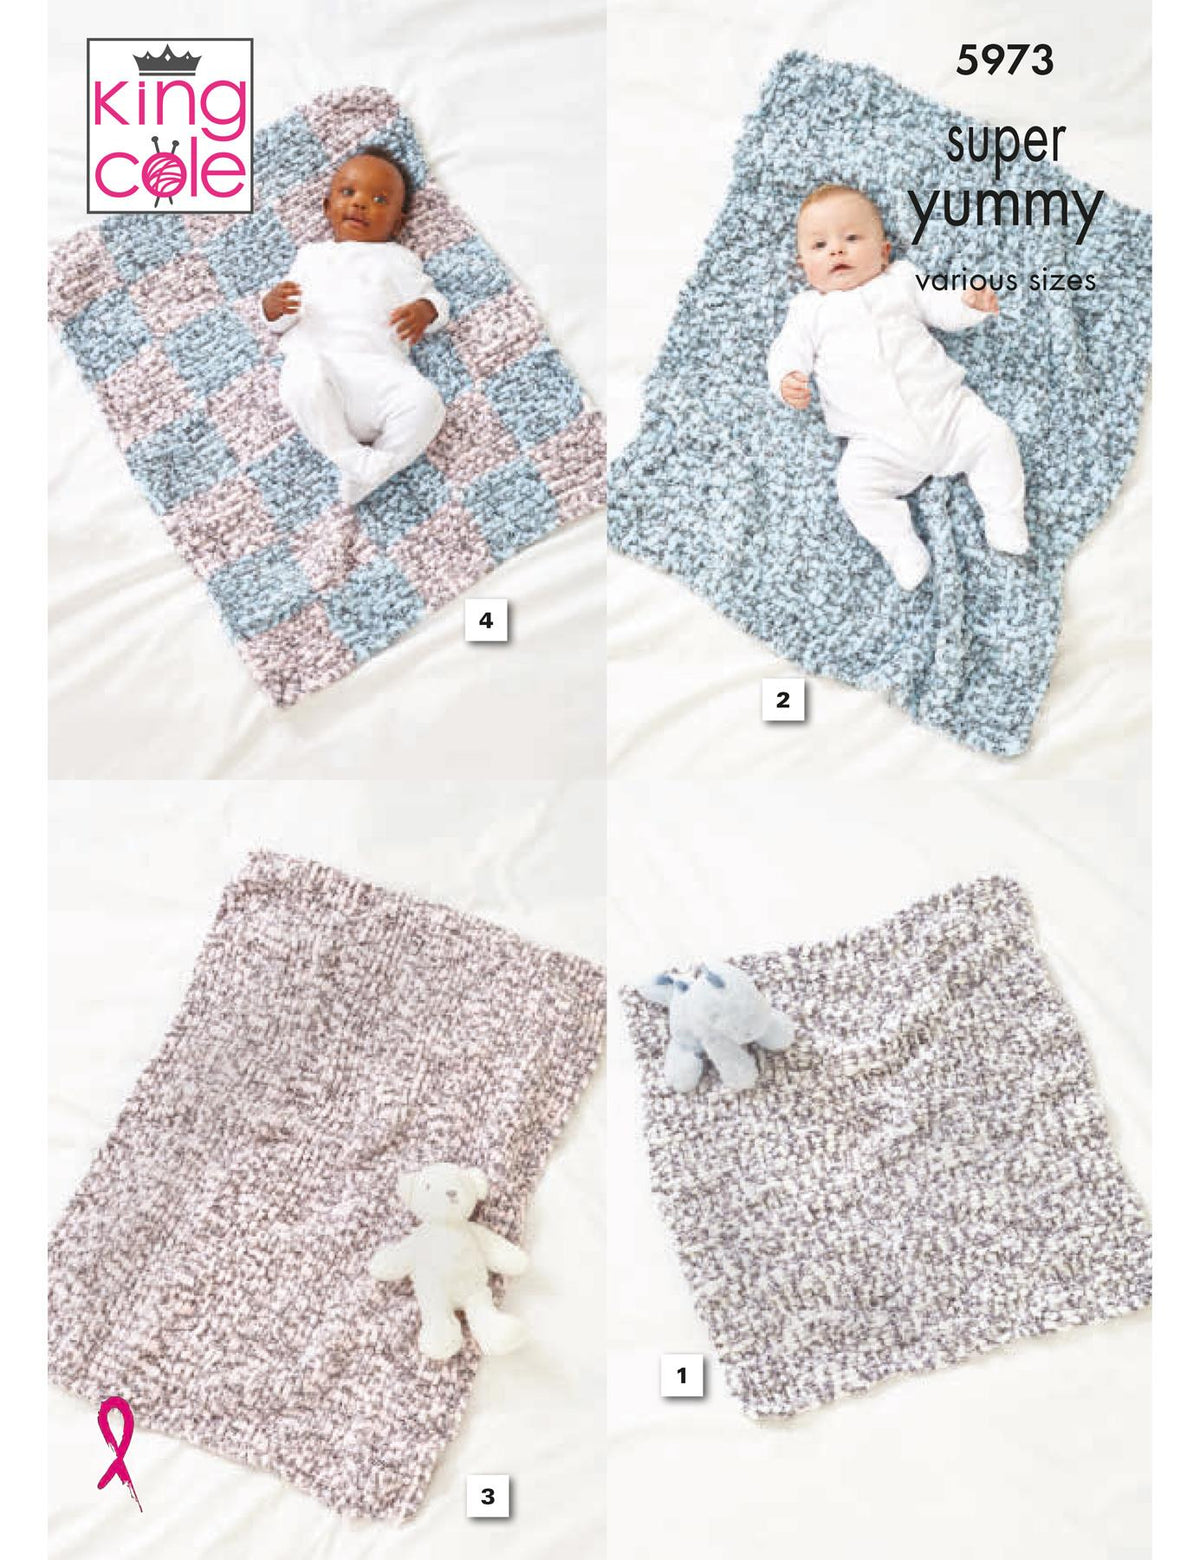 King Cole Super Yummy knitting pattern (5973) blankets